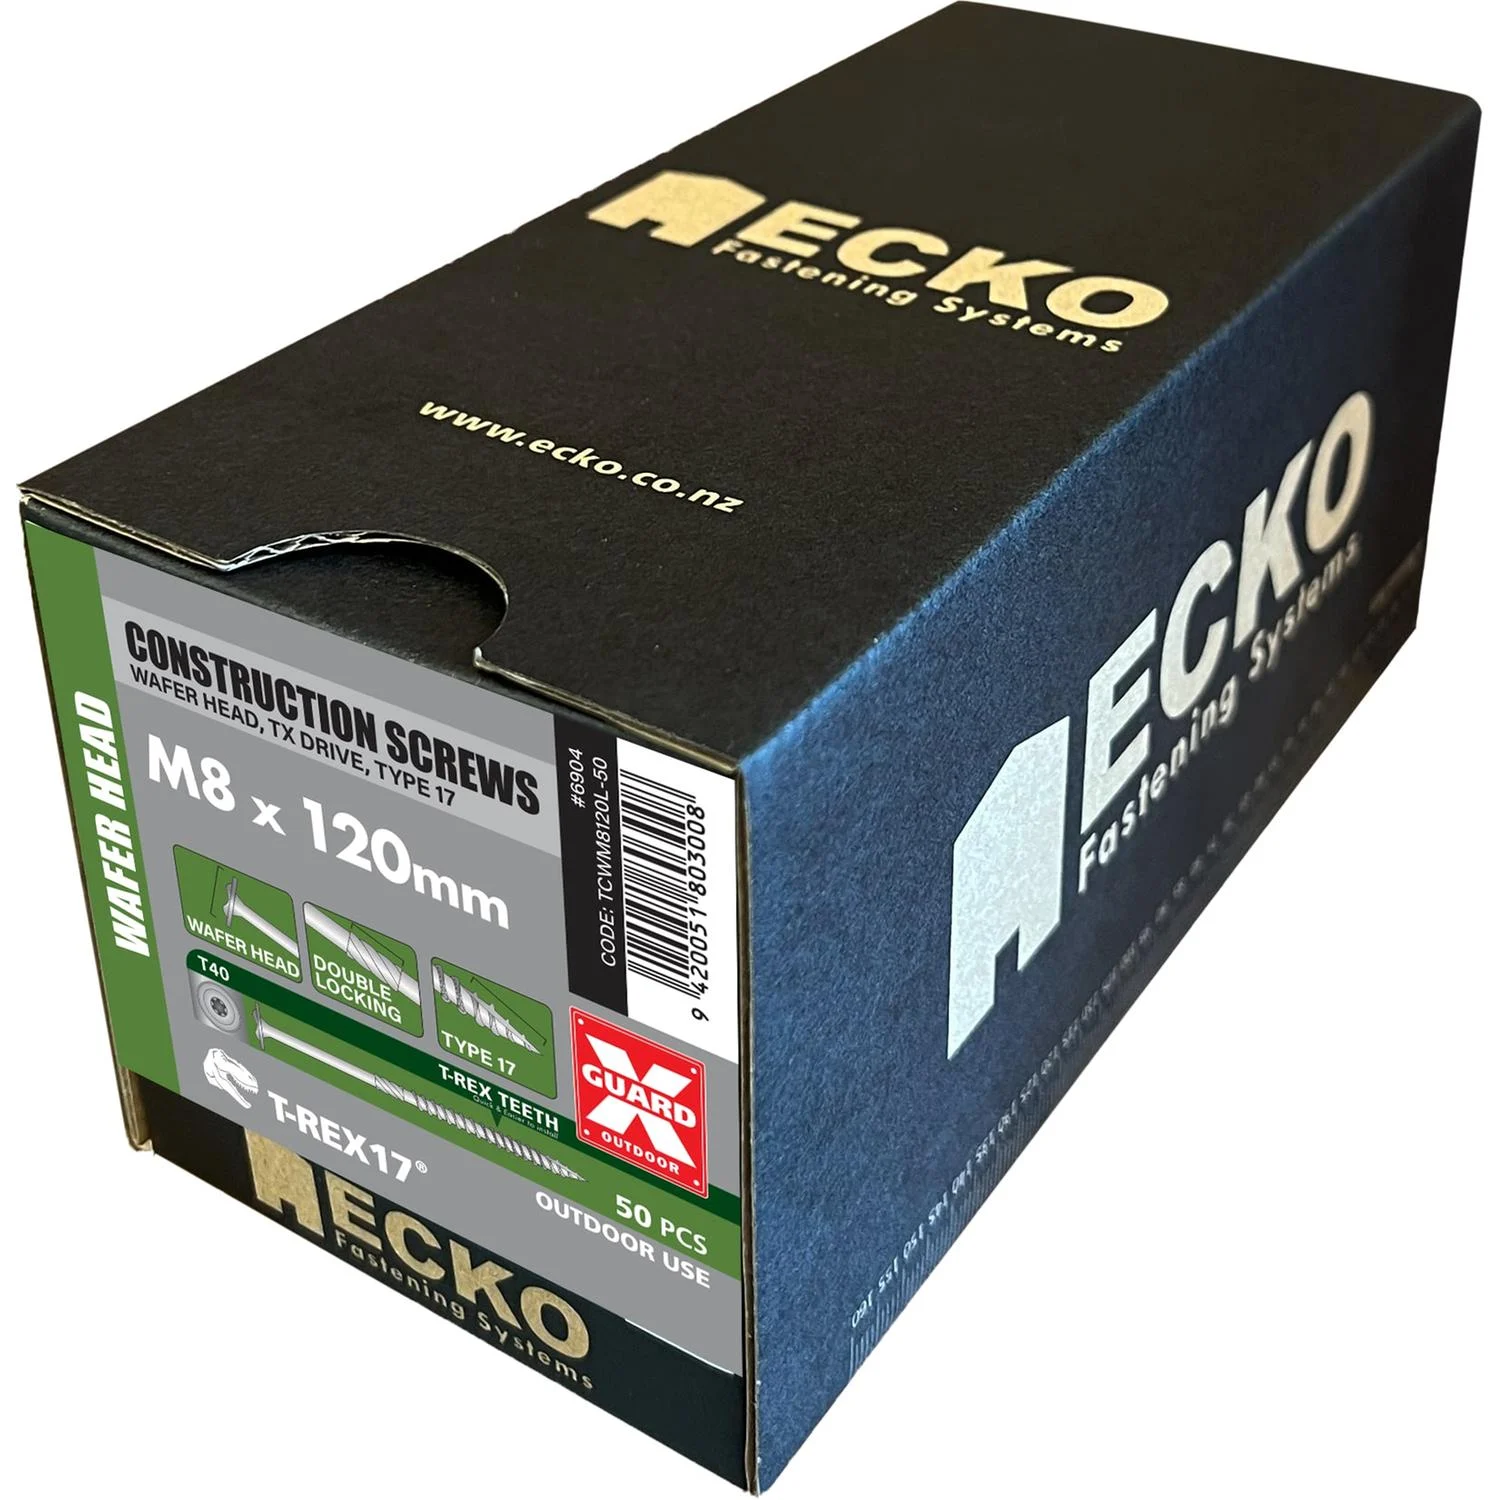 Ecko T-Rex17 Wafer Head Construction Screws M8 X 120Mm (500 Pack)